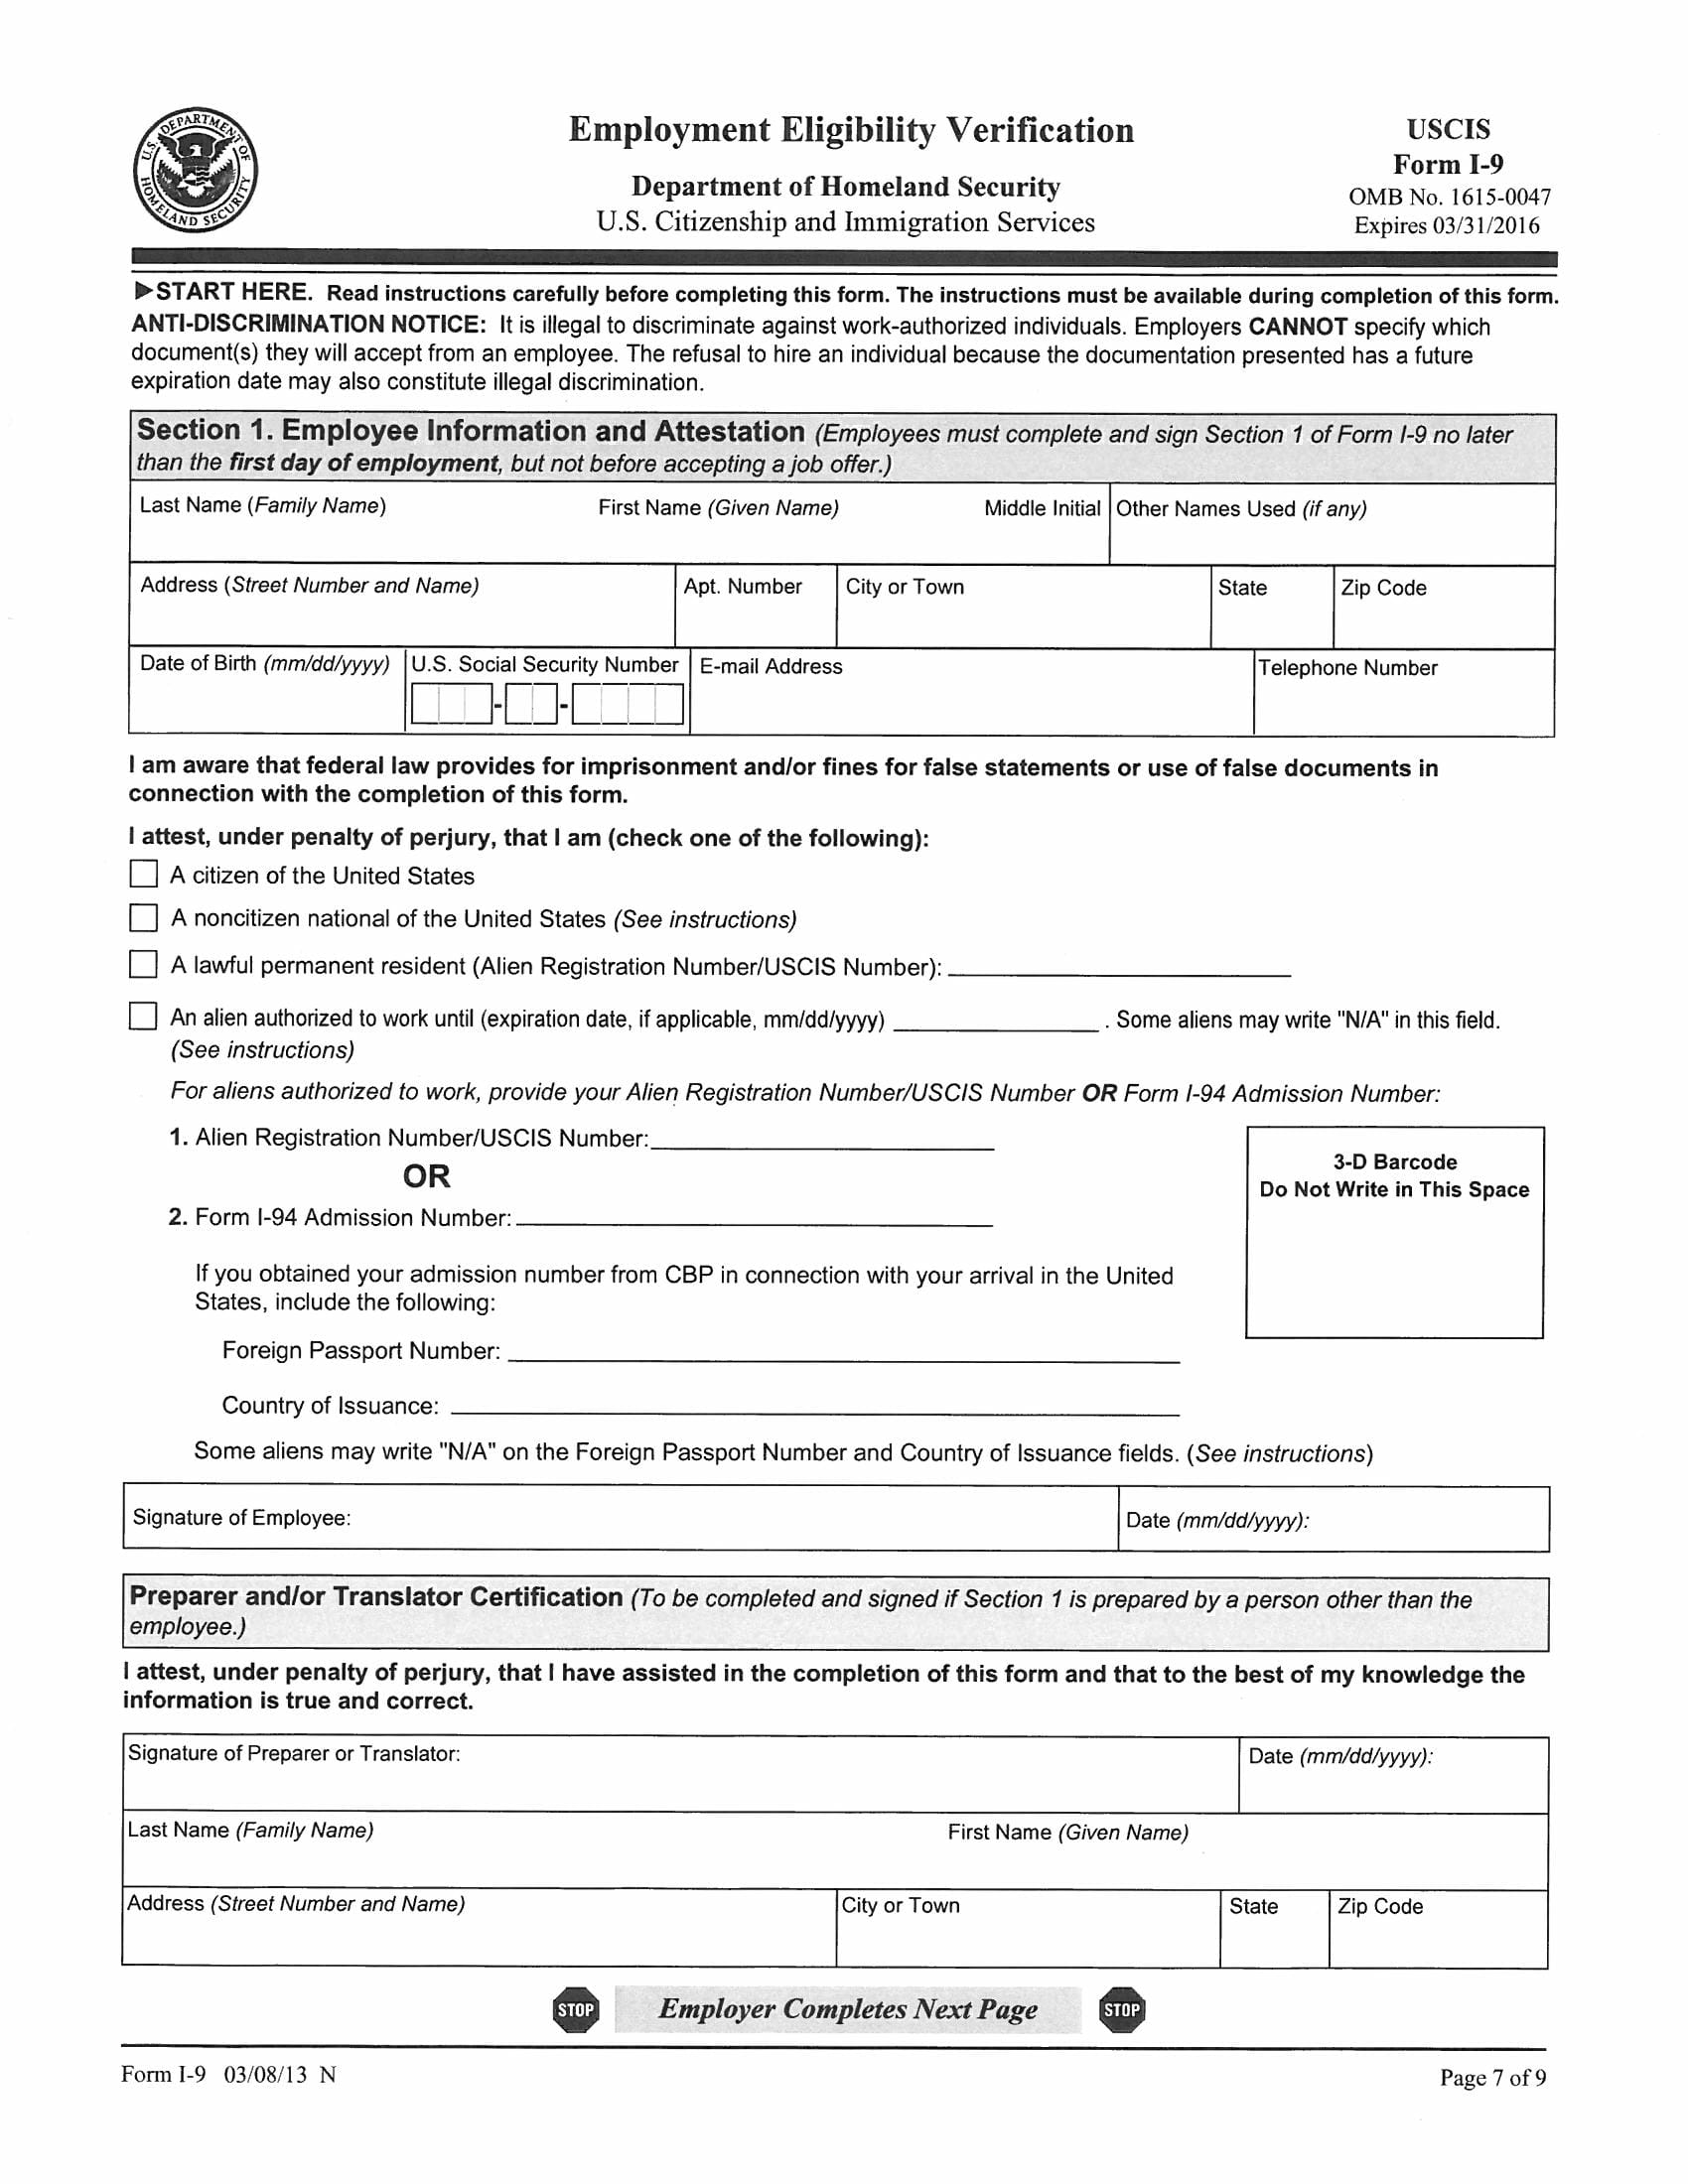 homeland security employment eligibility verification form 1